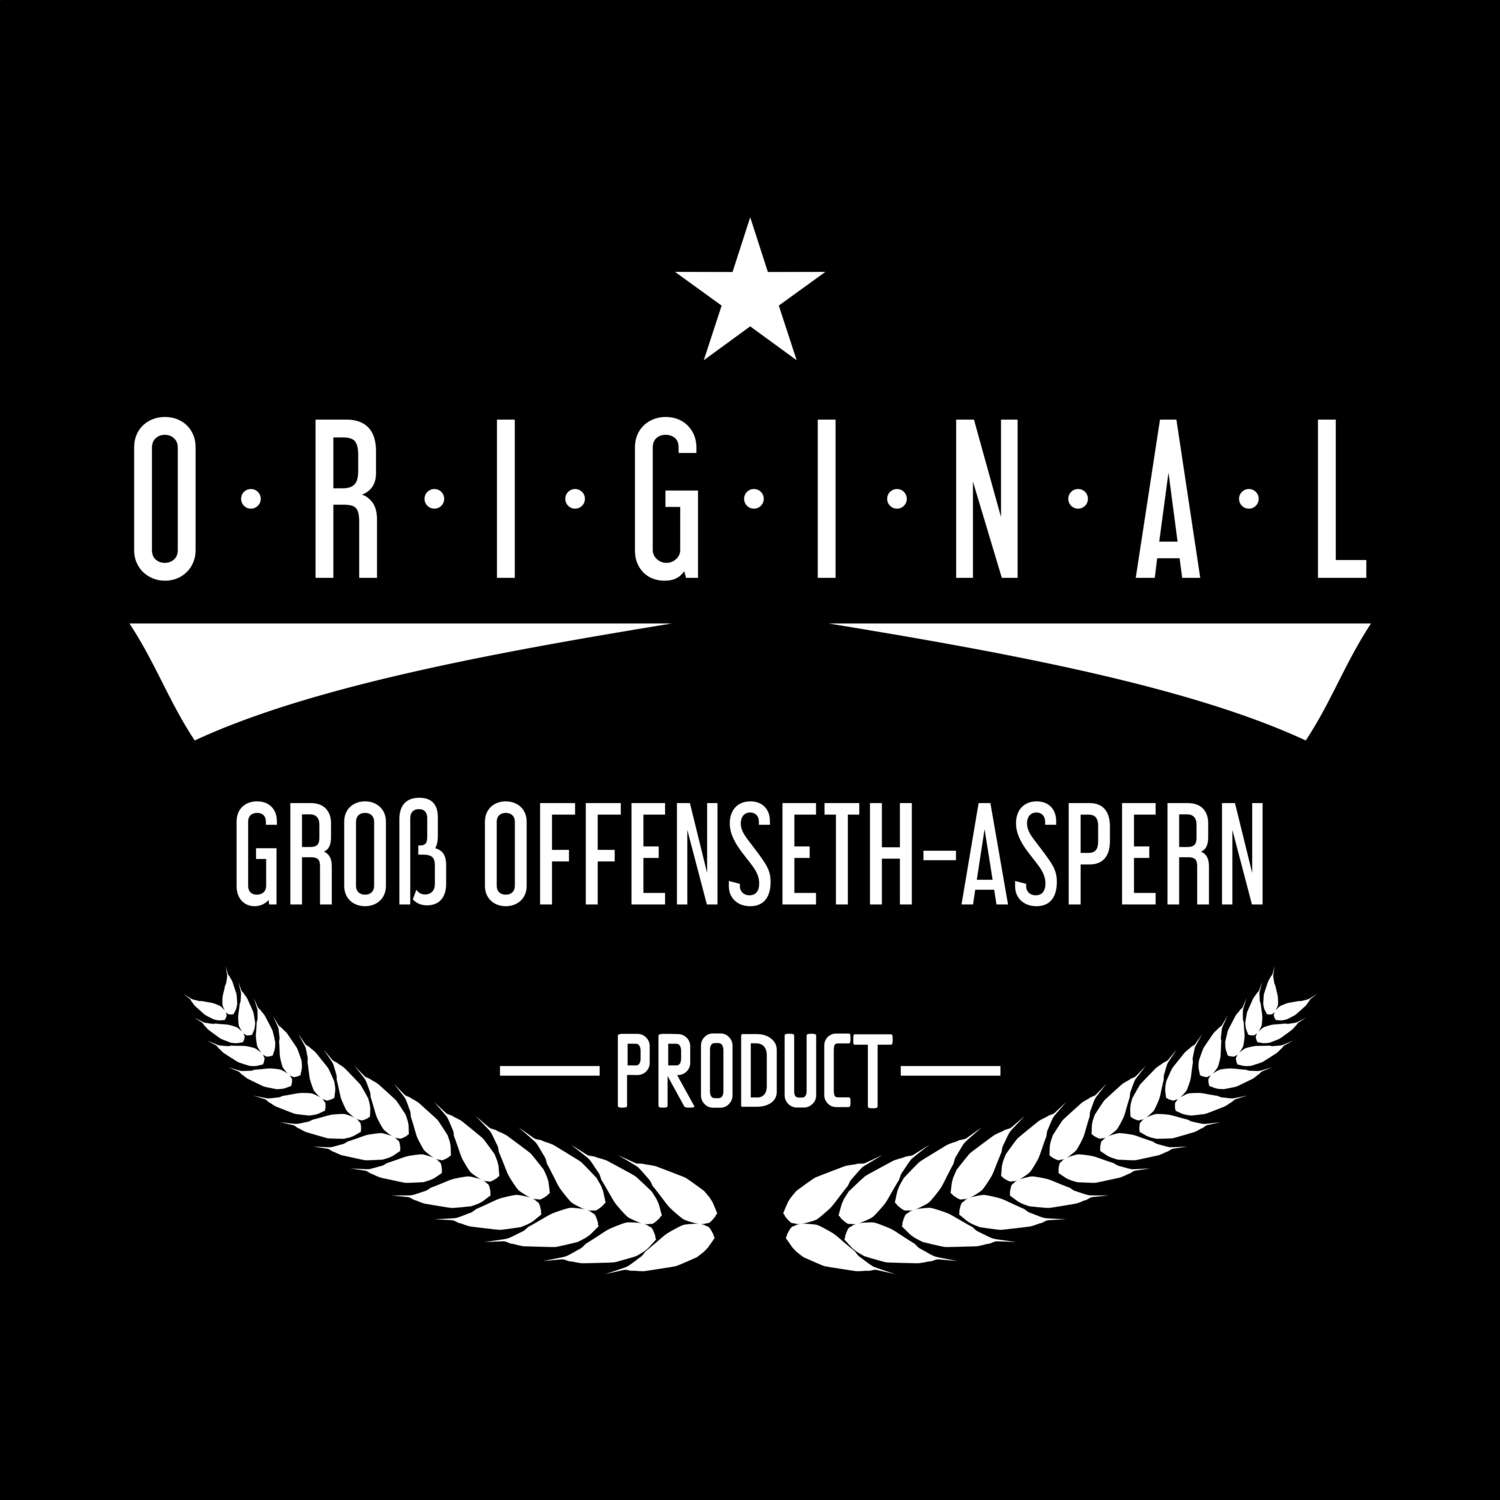 Groß Offenseth-Aspern T-Shirt »Original Product«